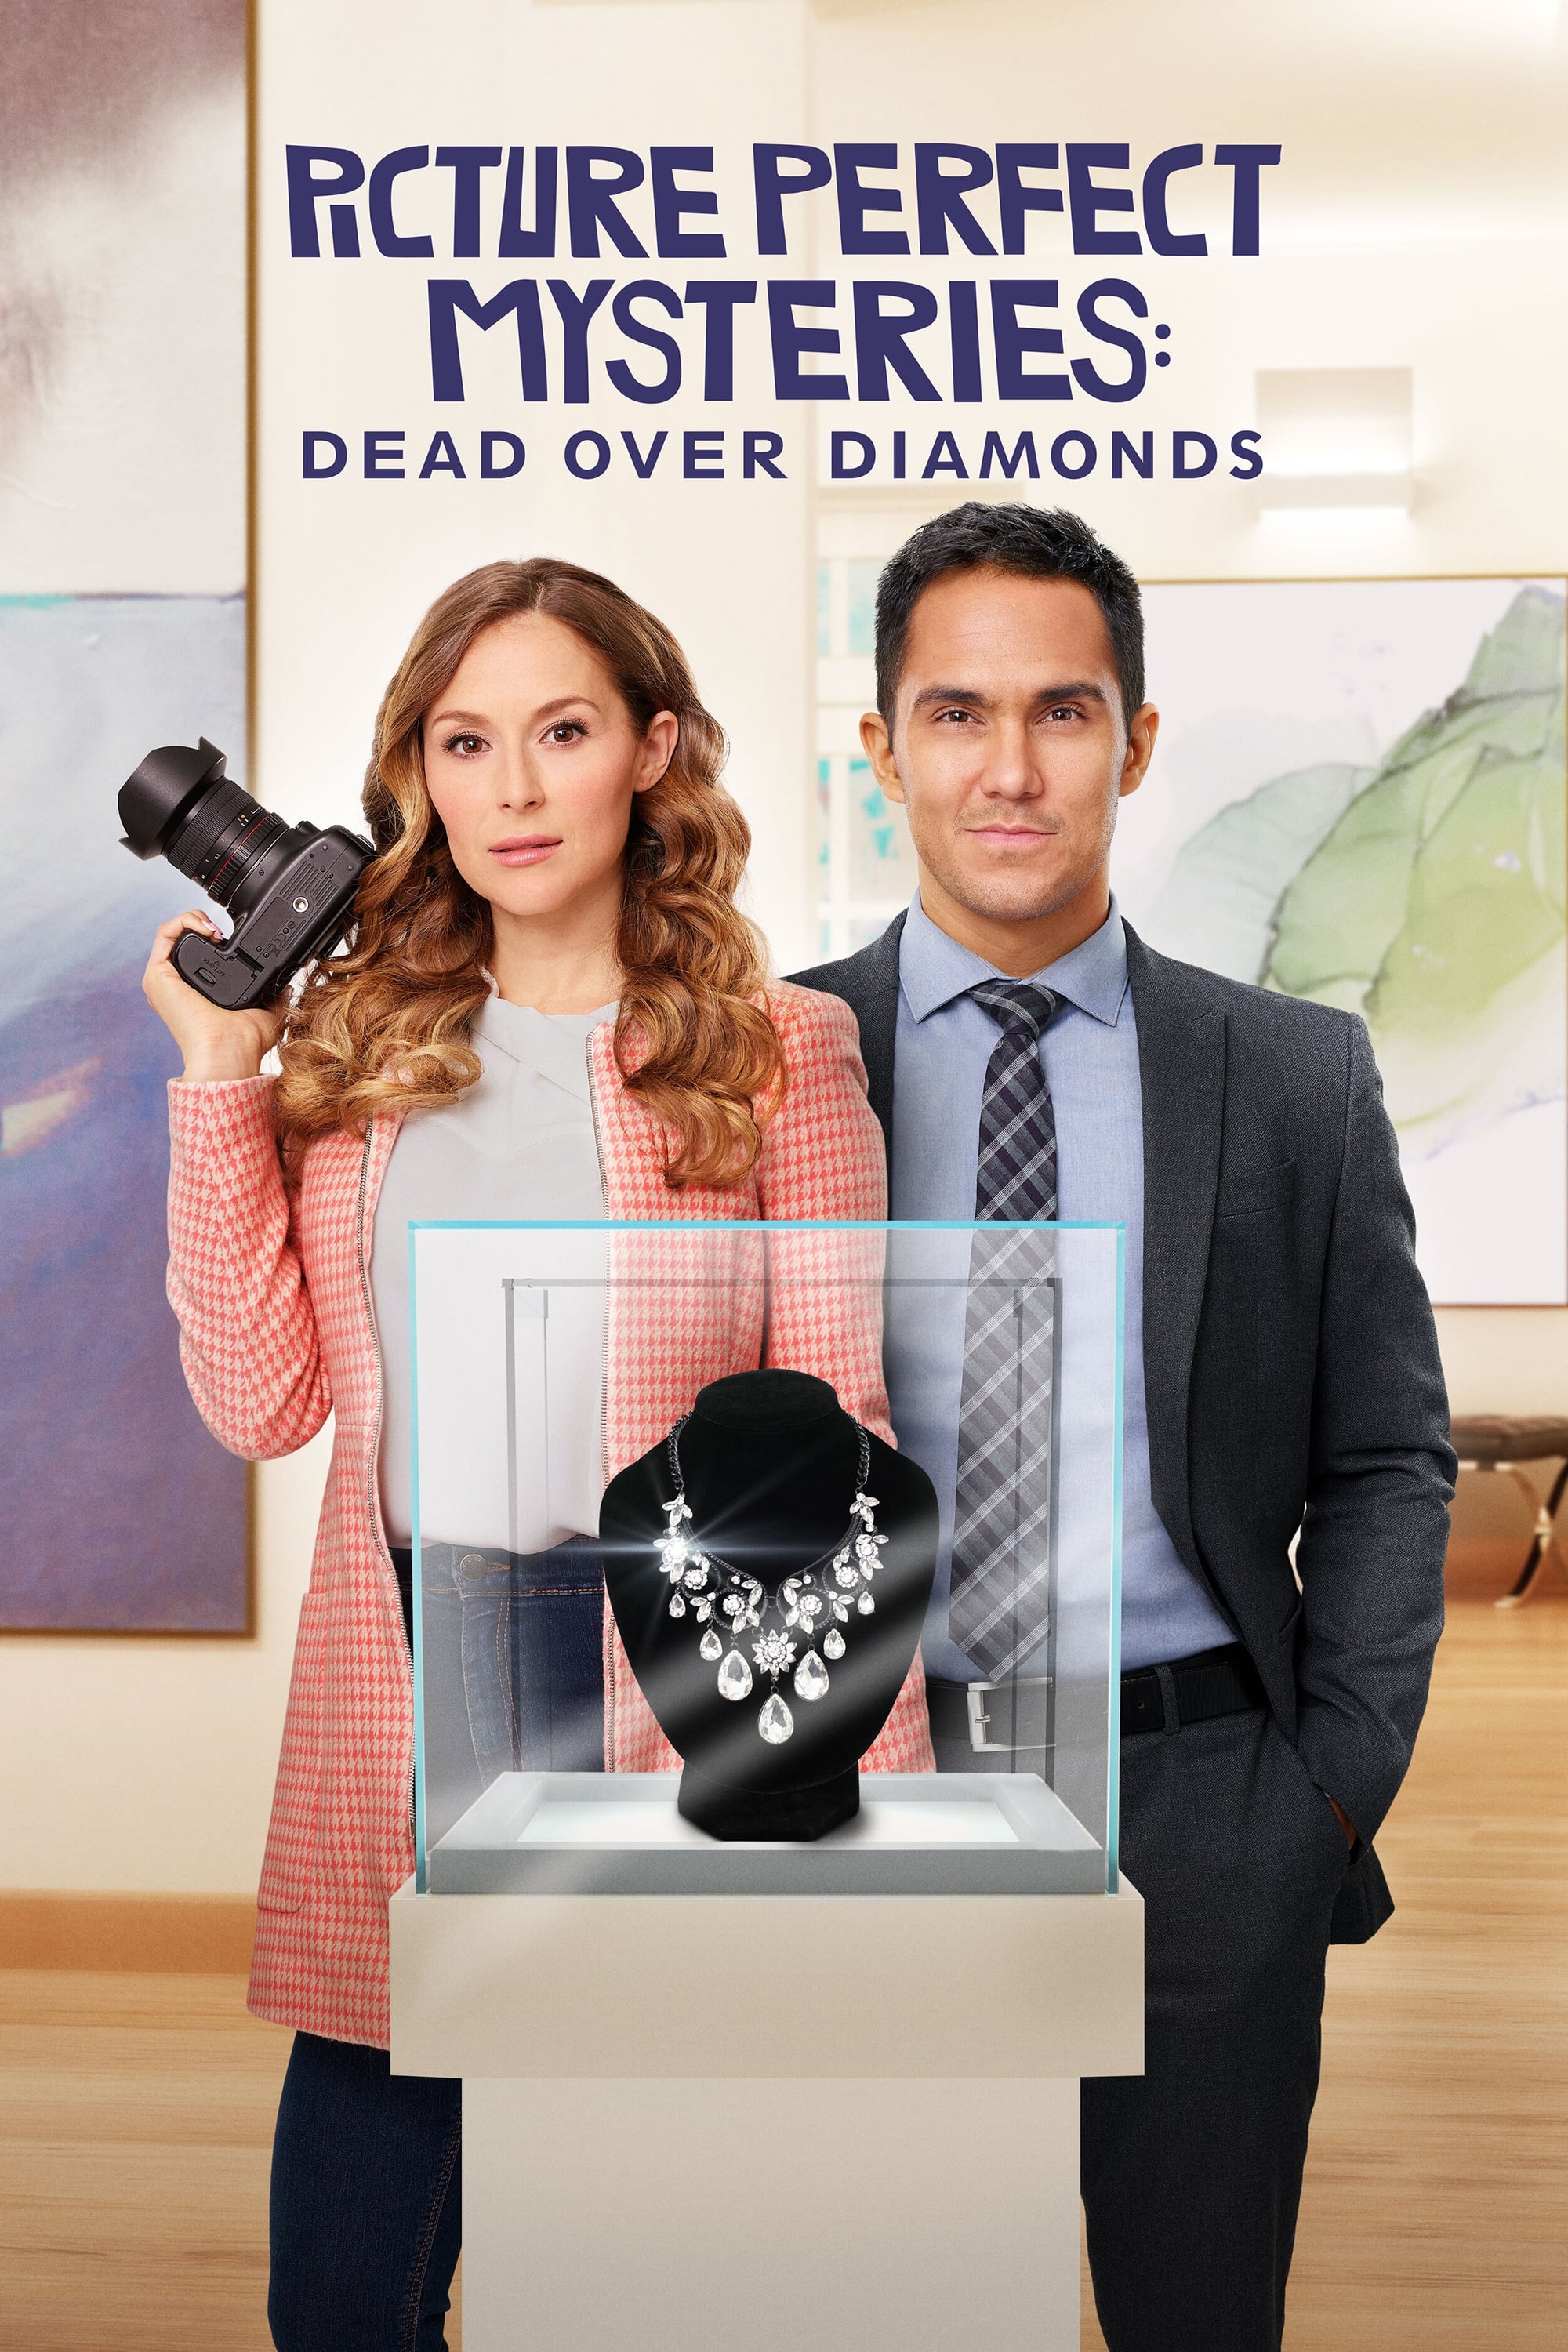 Picture Perfect Mysteries: Dead Over Diamonds (2020)